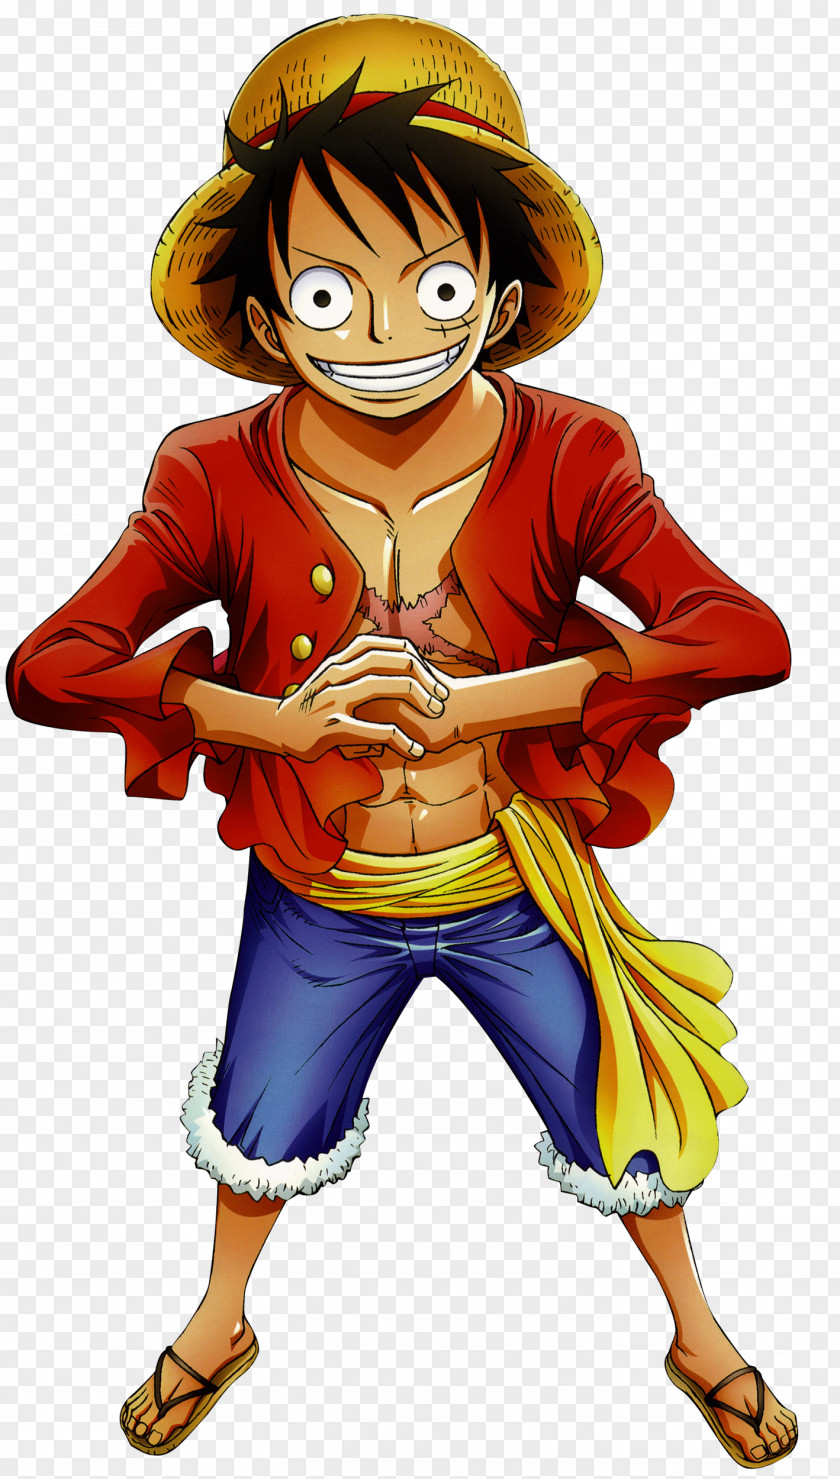 One Piece Monkey D. Luffy Vinsmoke Sanji Garp Shanks PNG